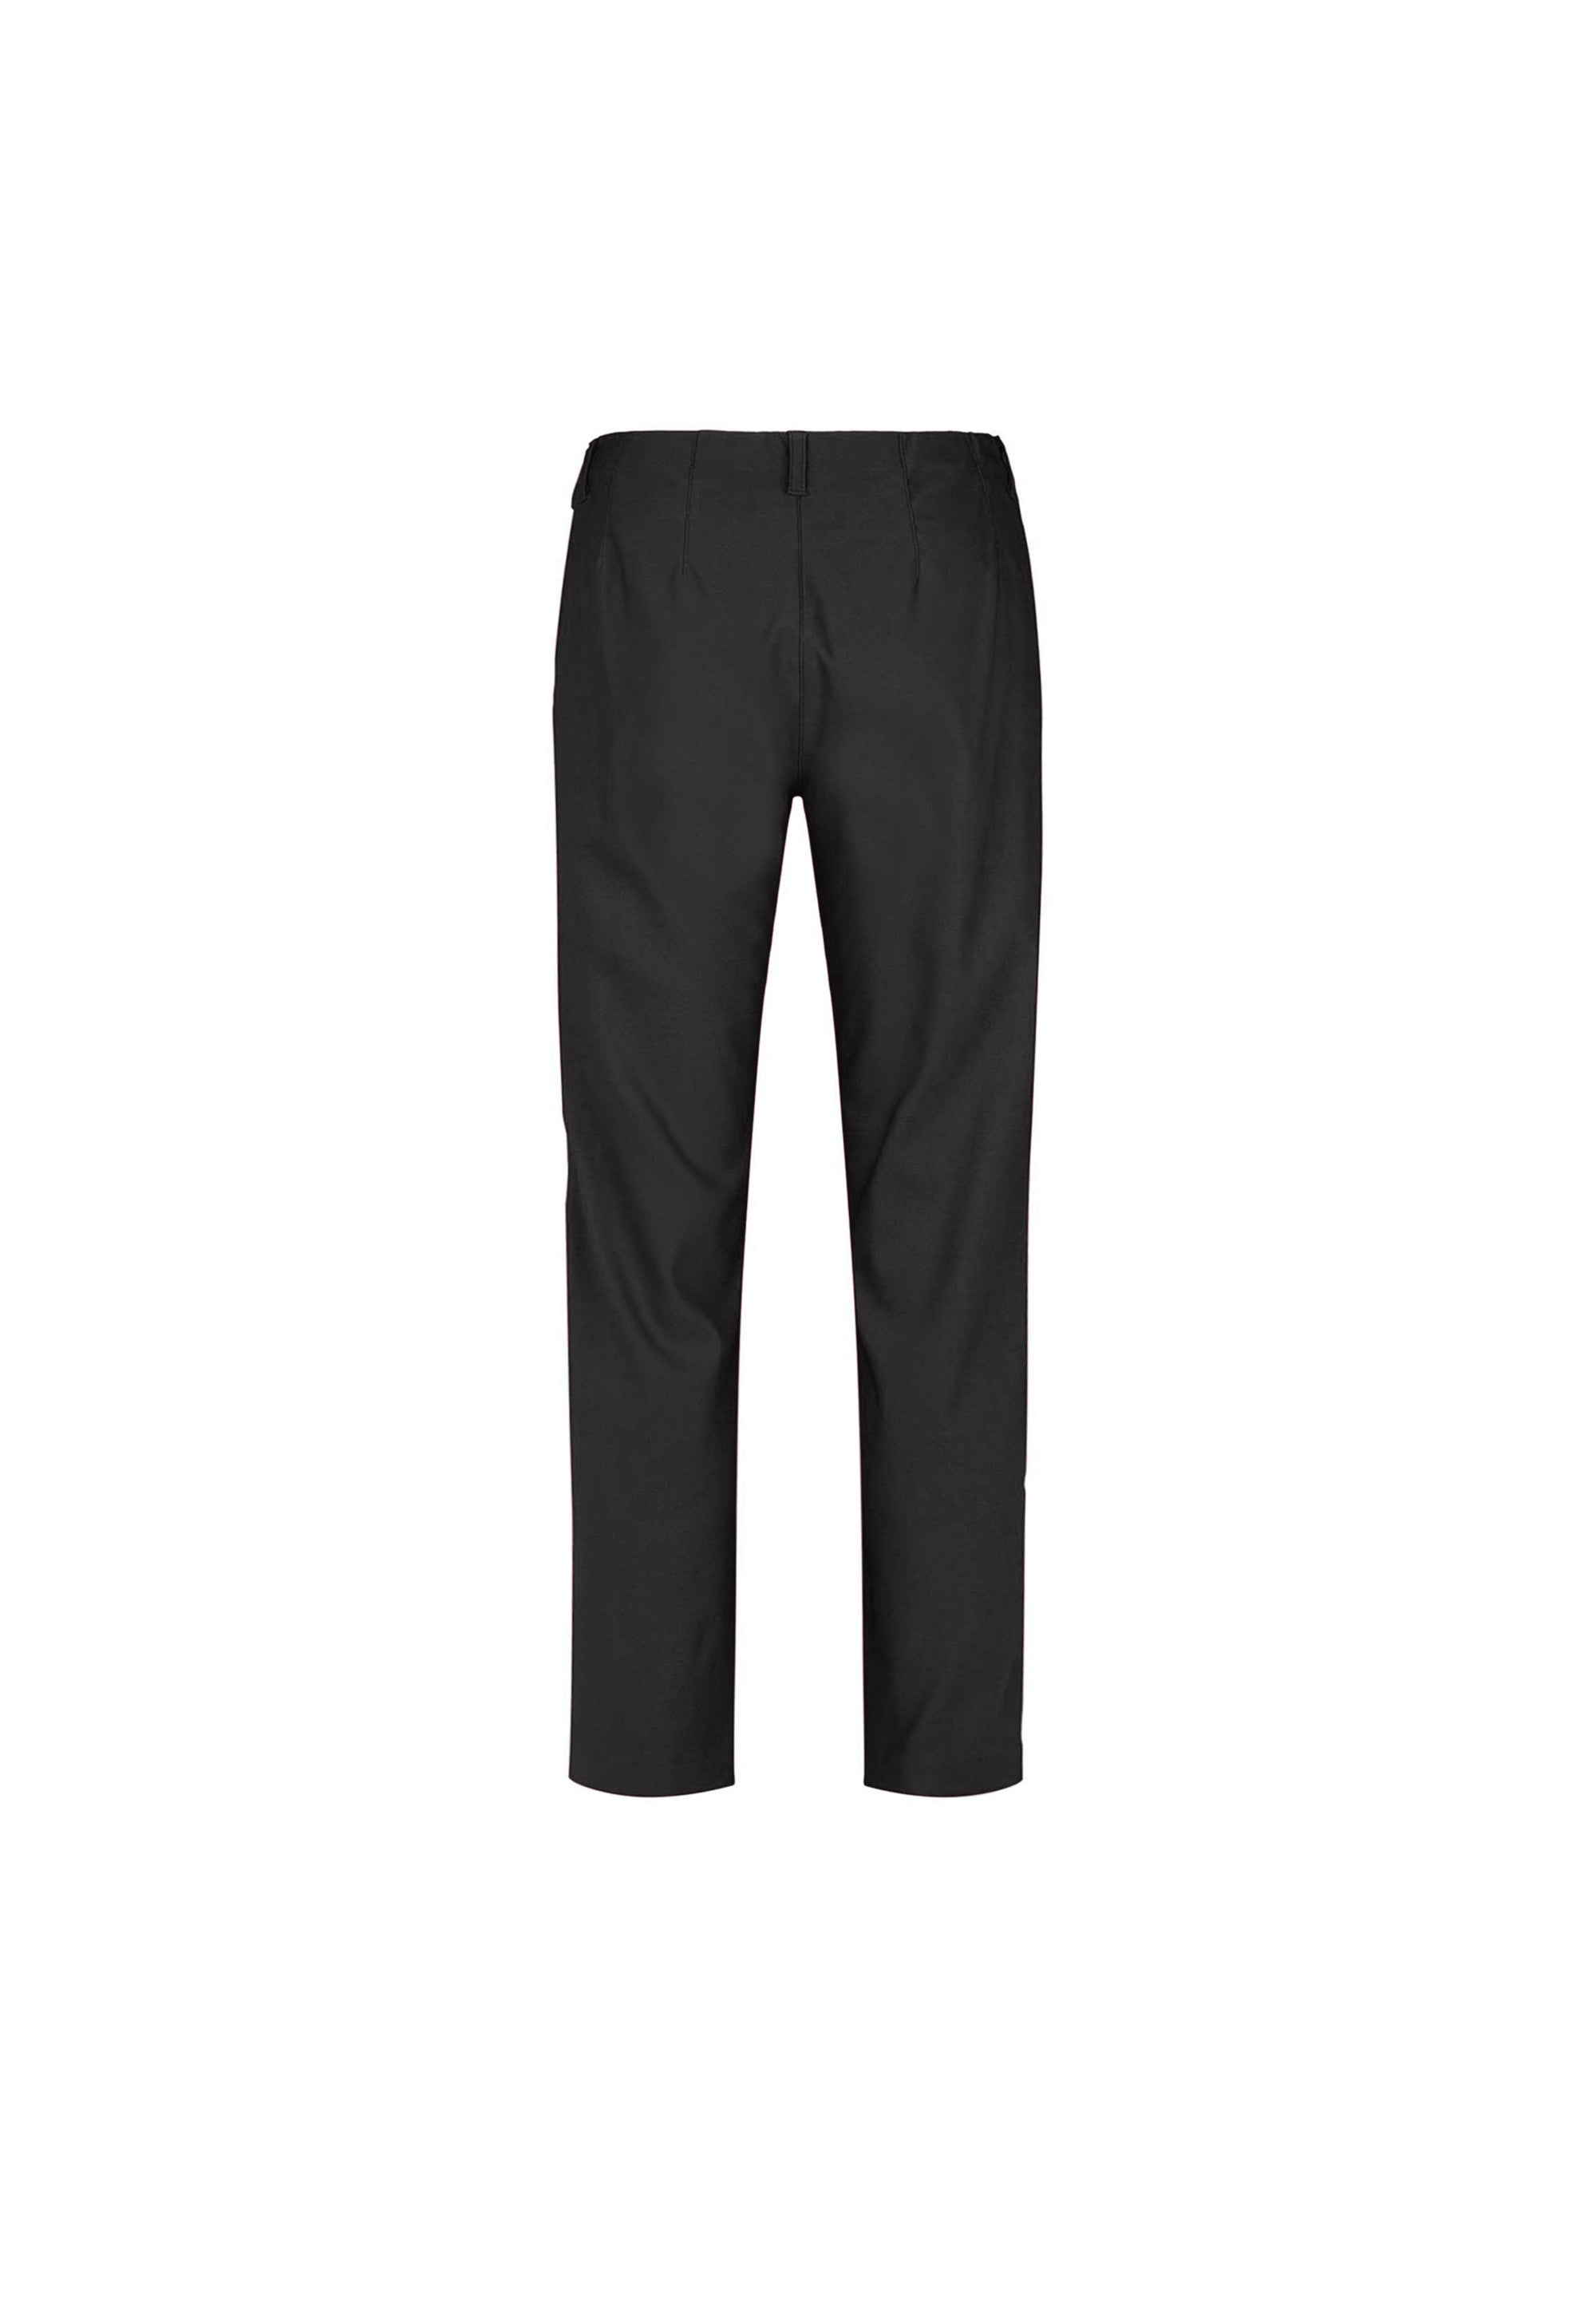 LAURIE Taylor Regular - Short Length Trousers REGULAR 99000 Black